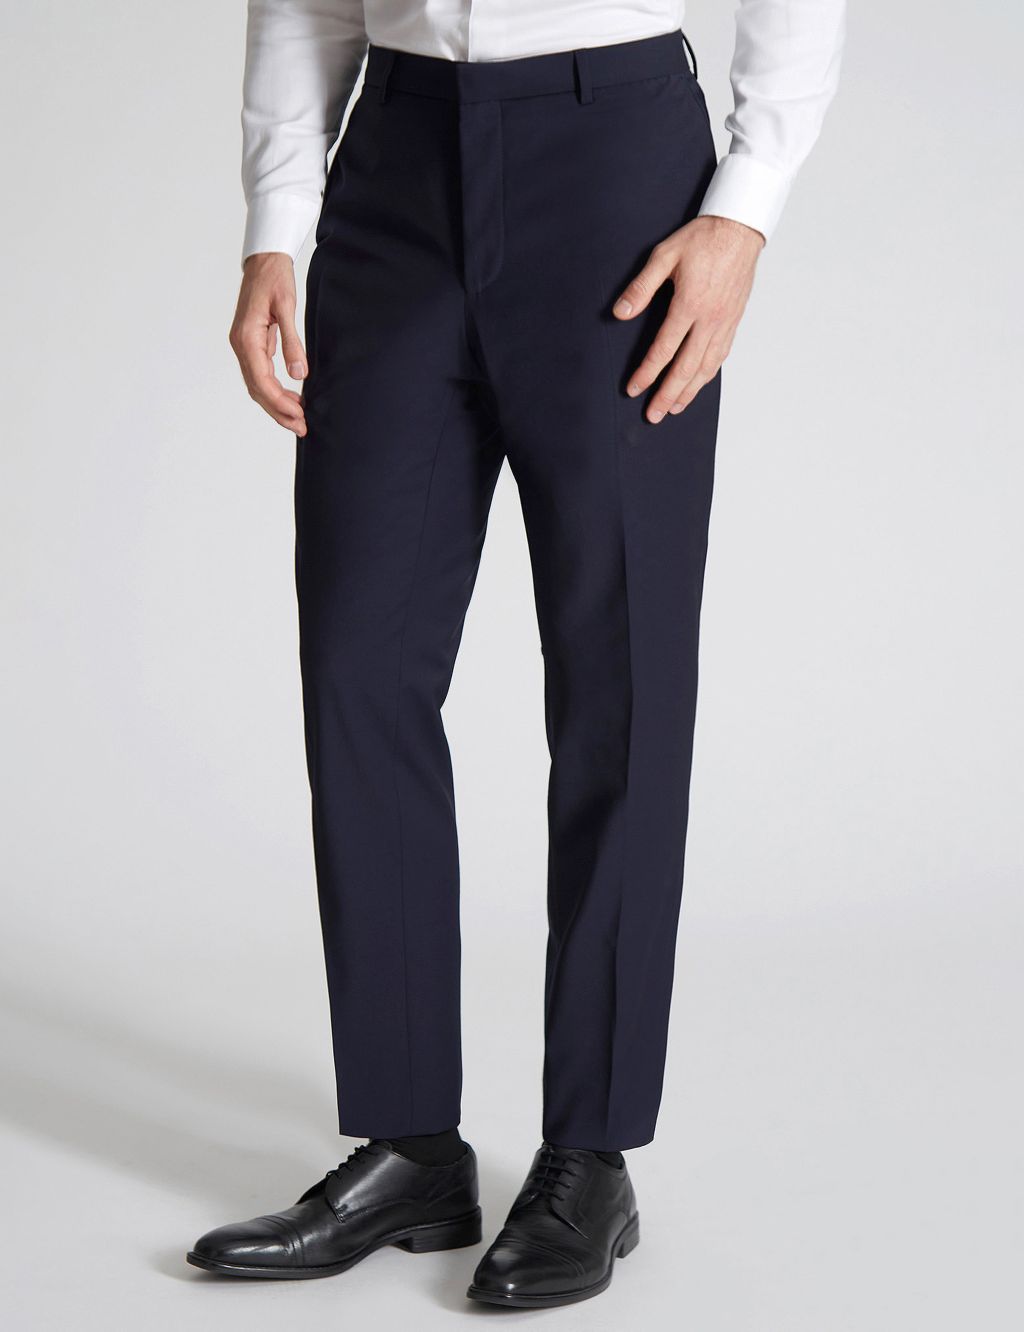 Men's Slim Fit Smart Trousers